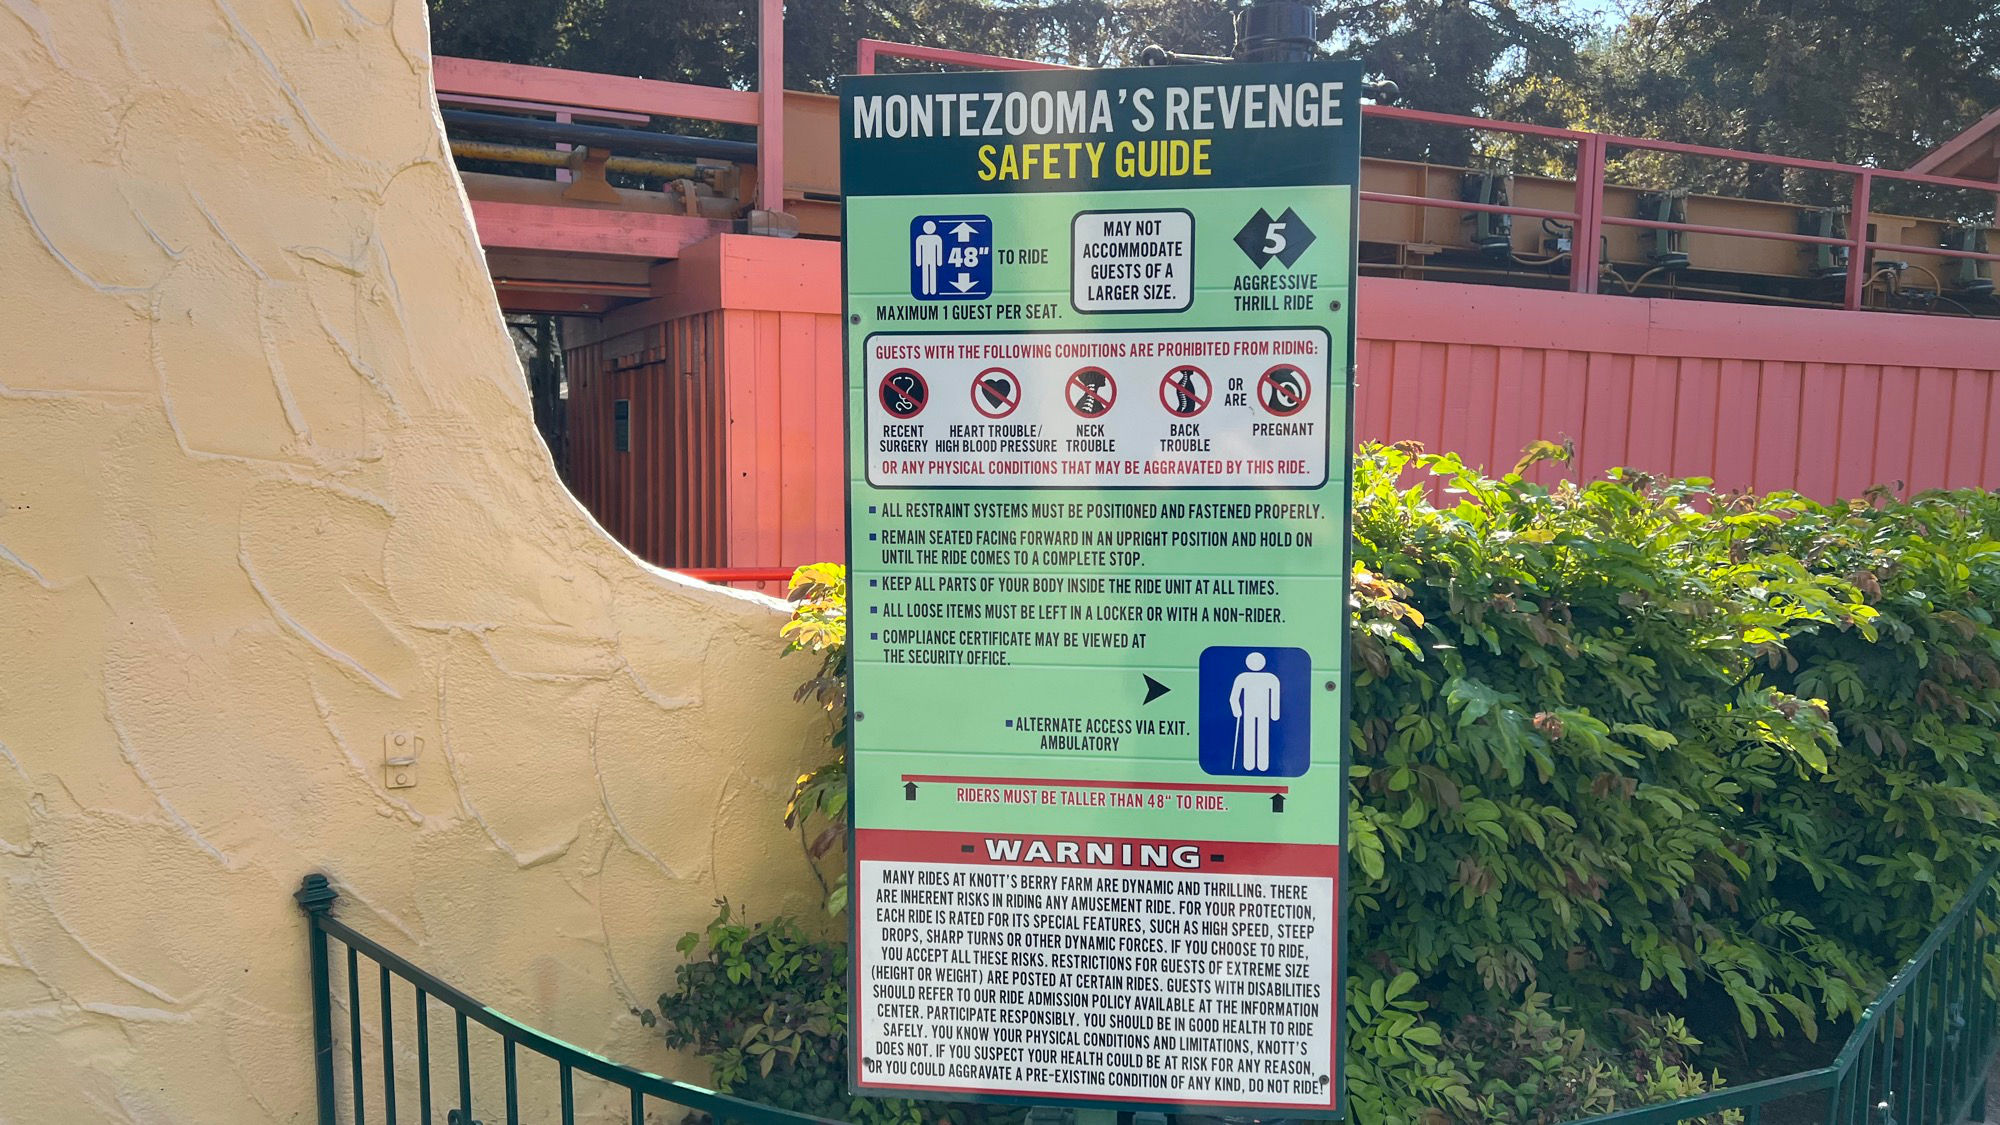 Montezooma's Revenge Safety Guide